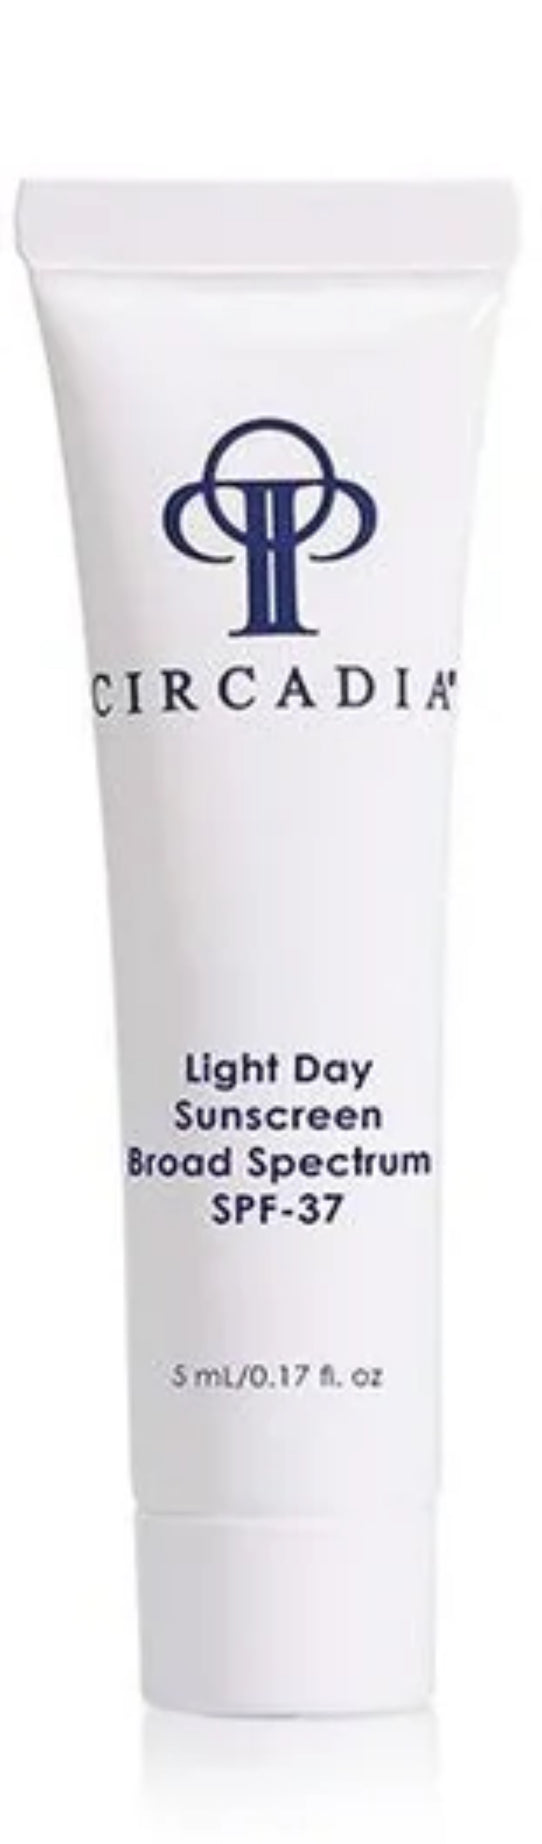 Light Day Sunscreen Broad Spectrum SPF 37